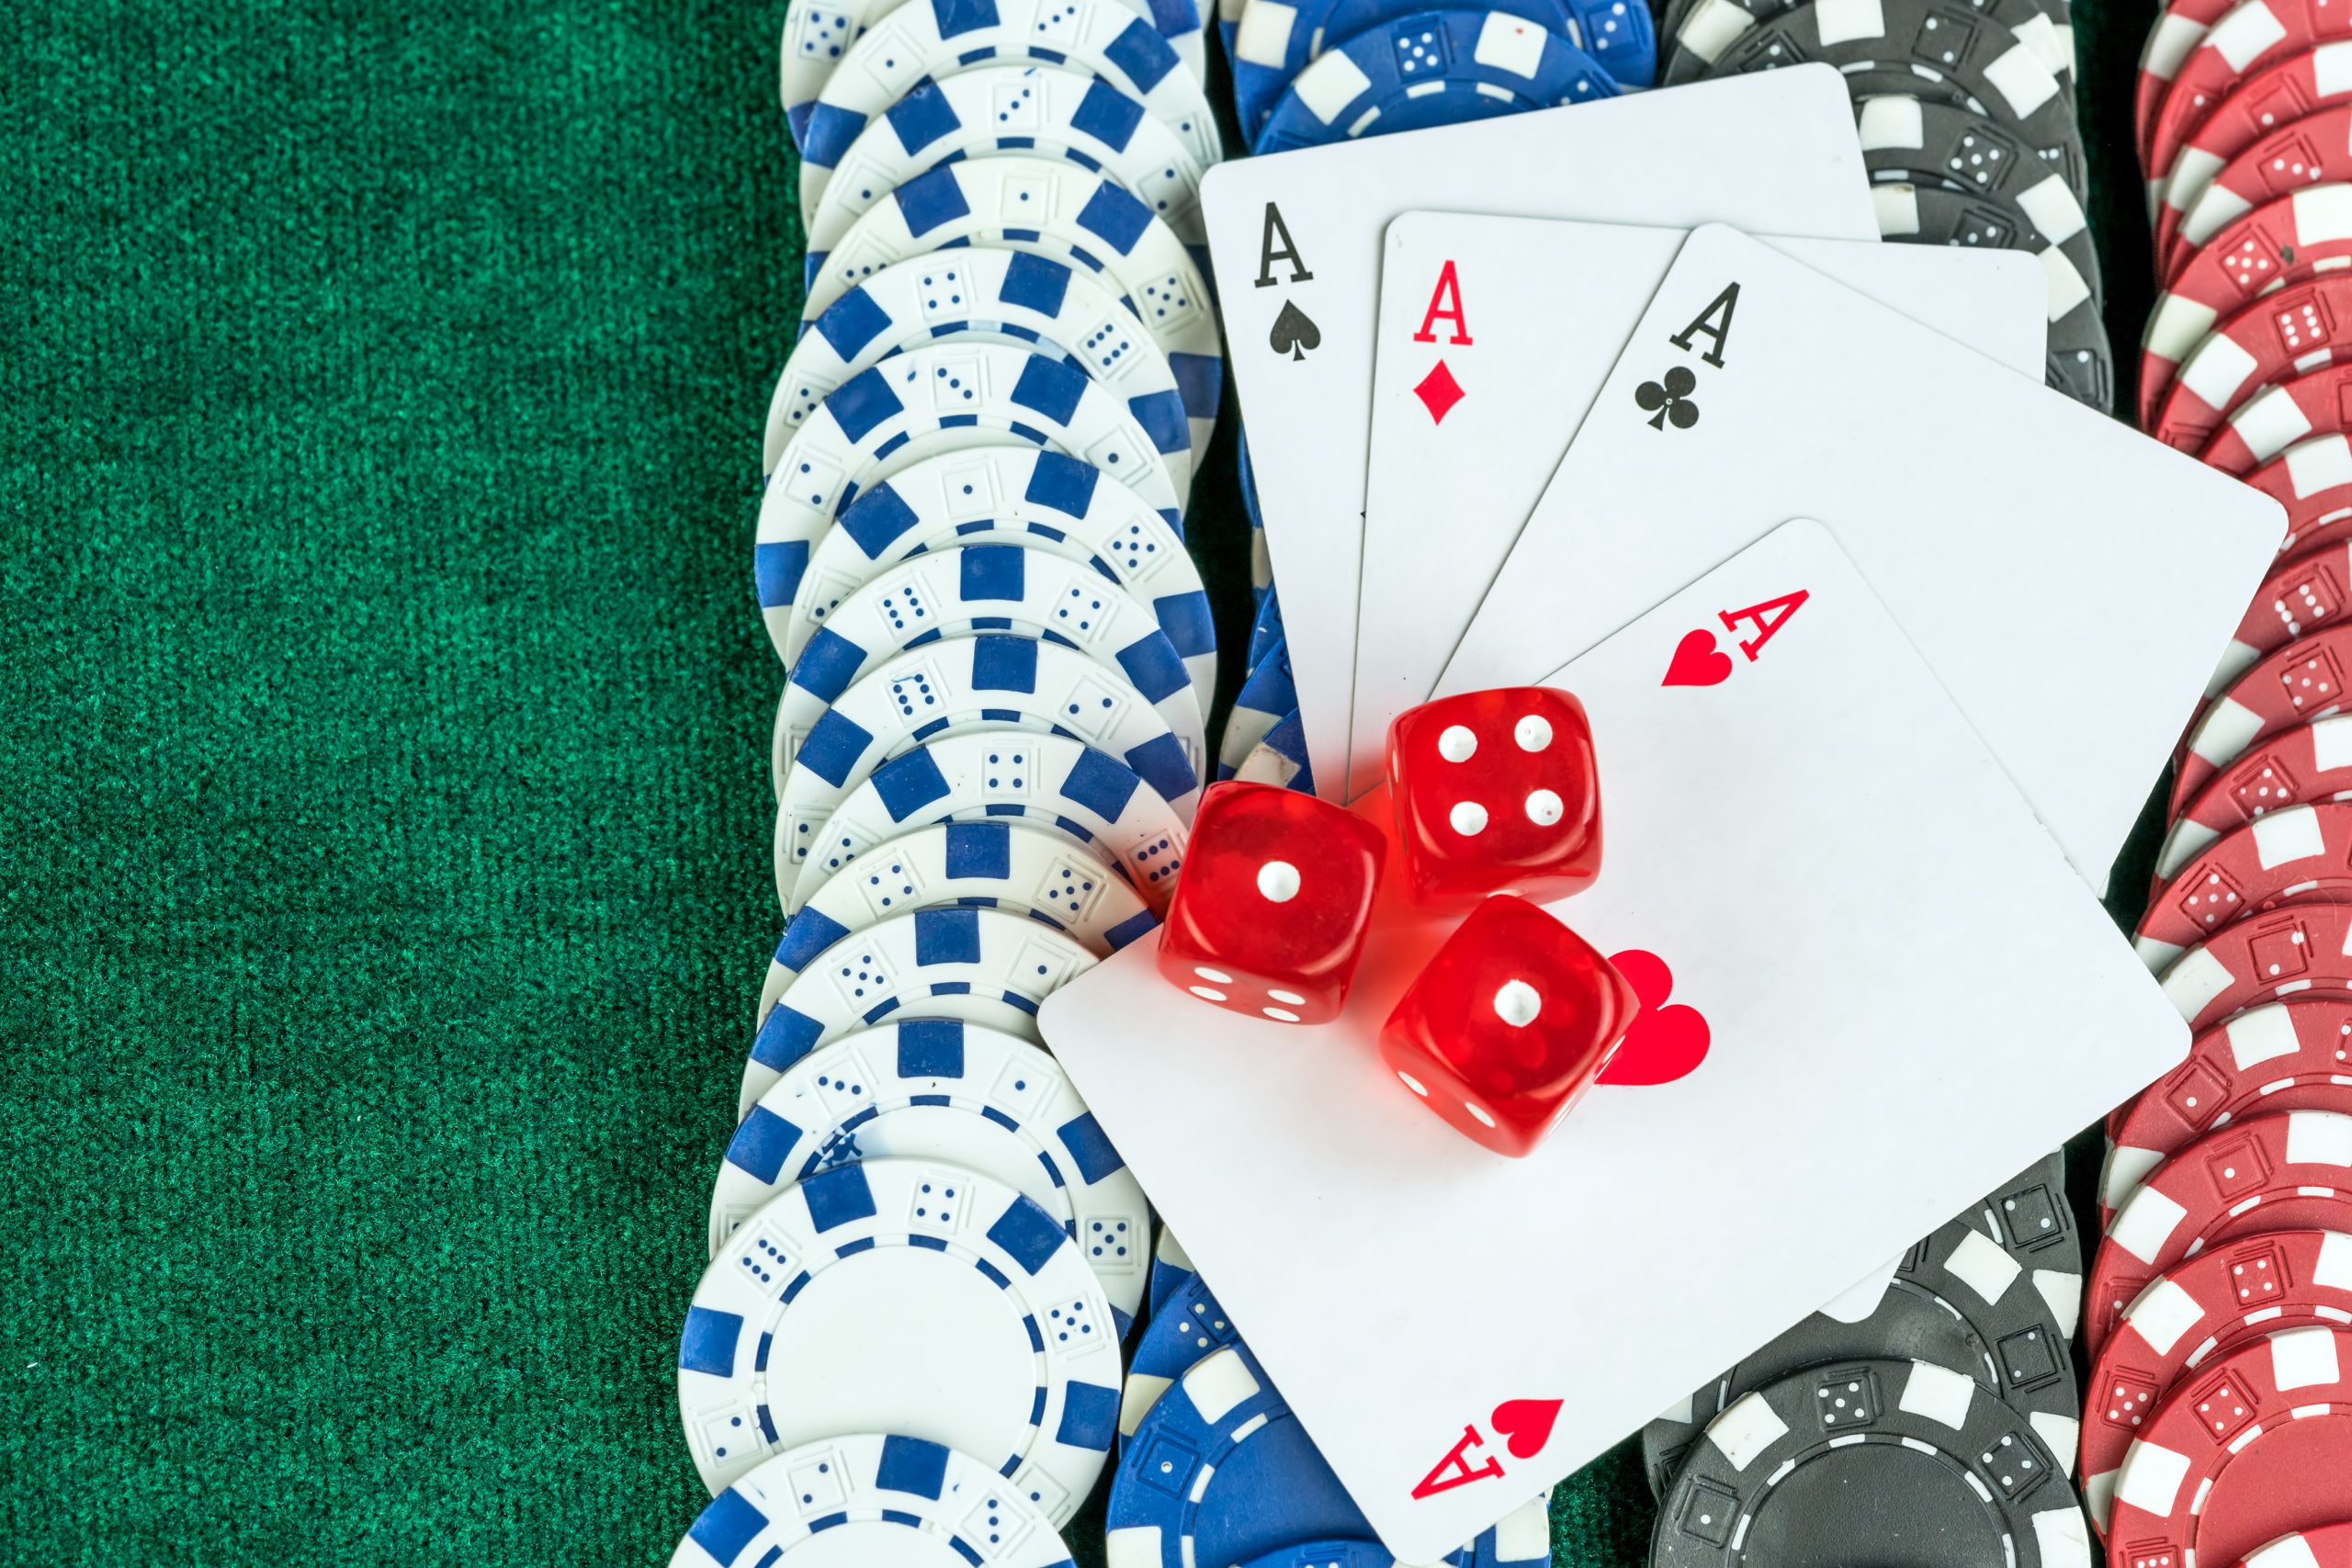 Best Strategies for Winning at Casino Games